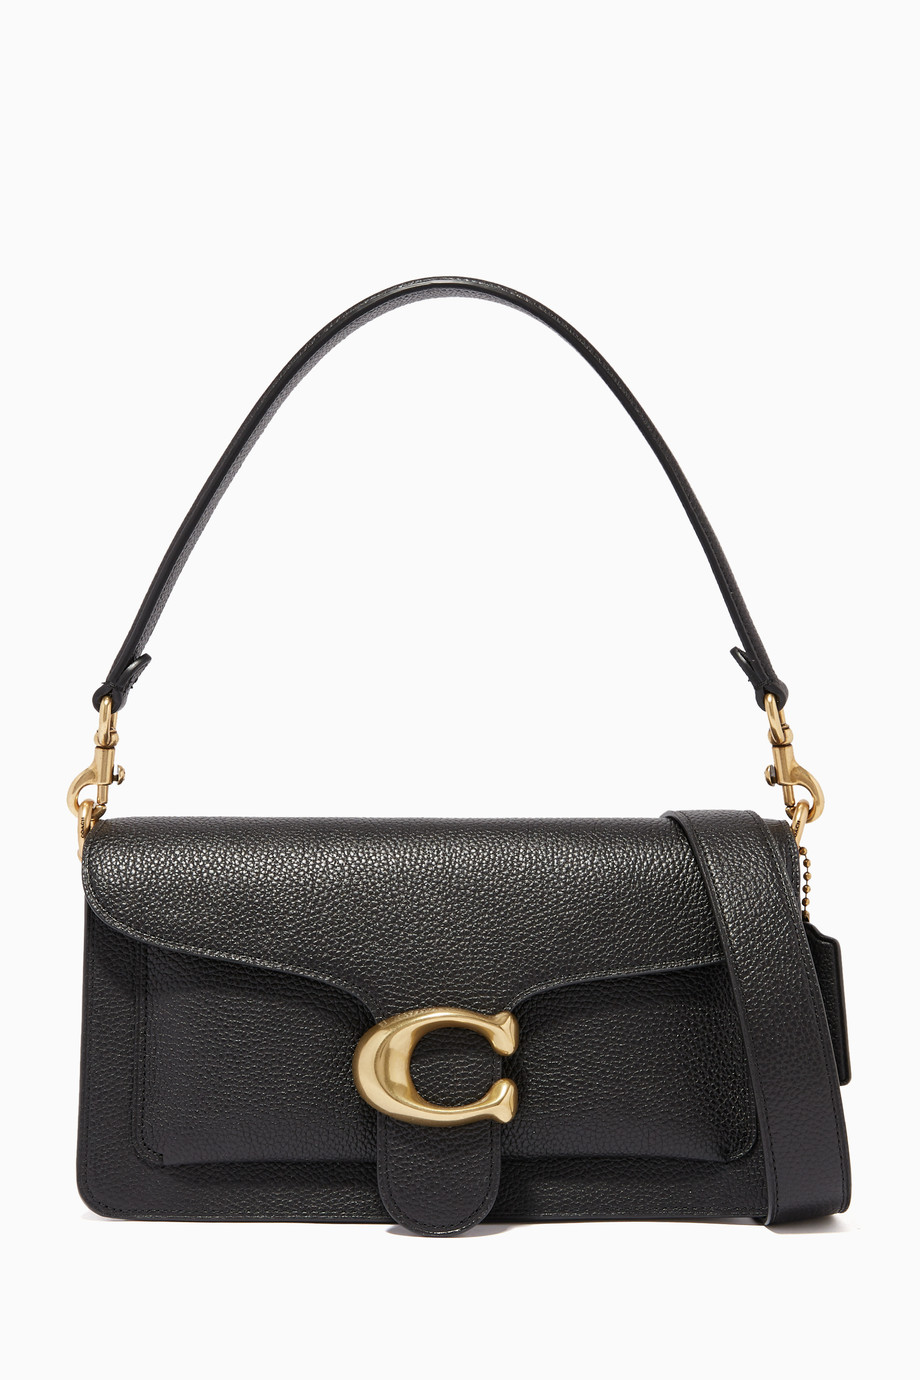 Shop Coach Black Tabby 26 Pebble Leather Shoulder Bag for Women | Ounass Kuwait